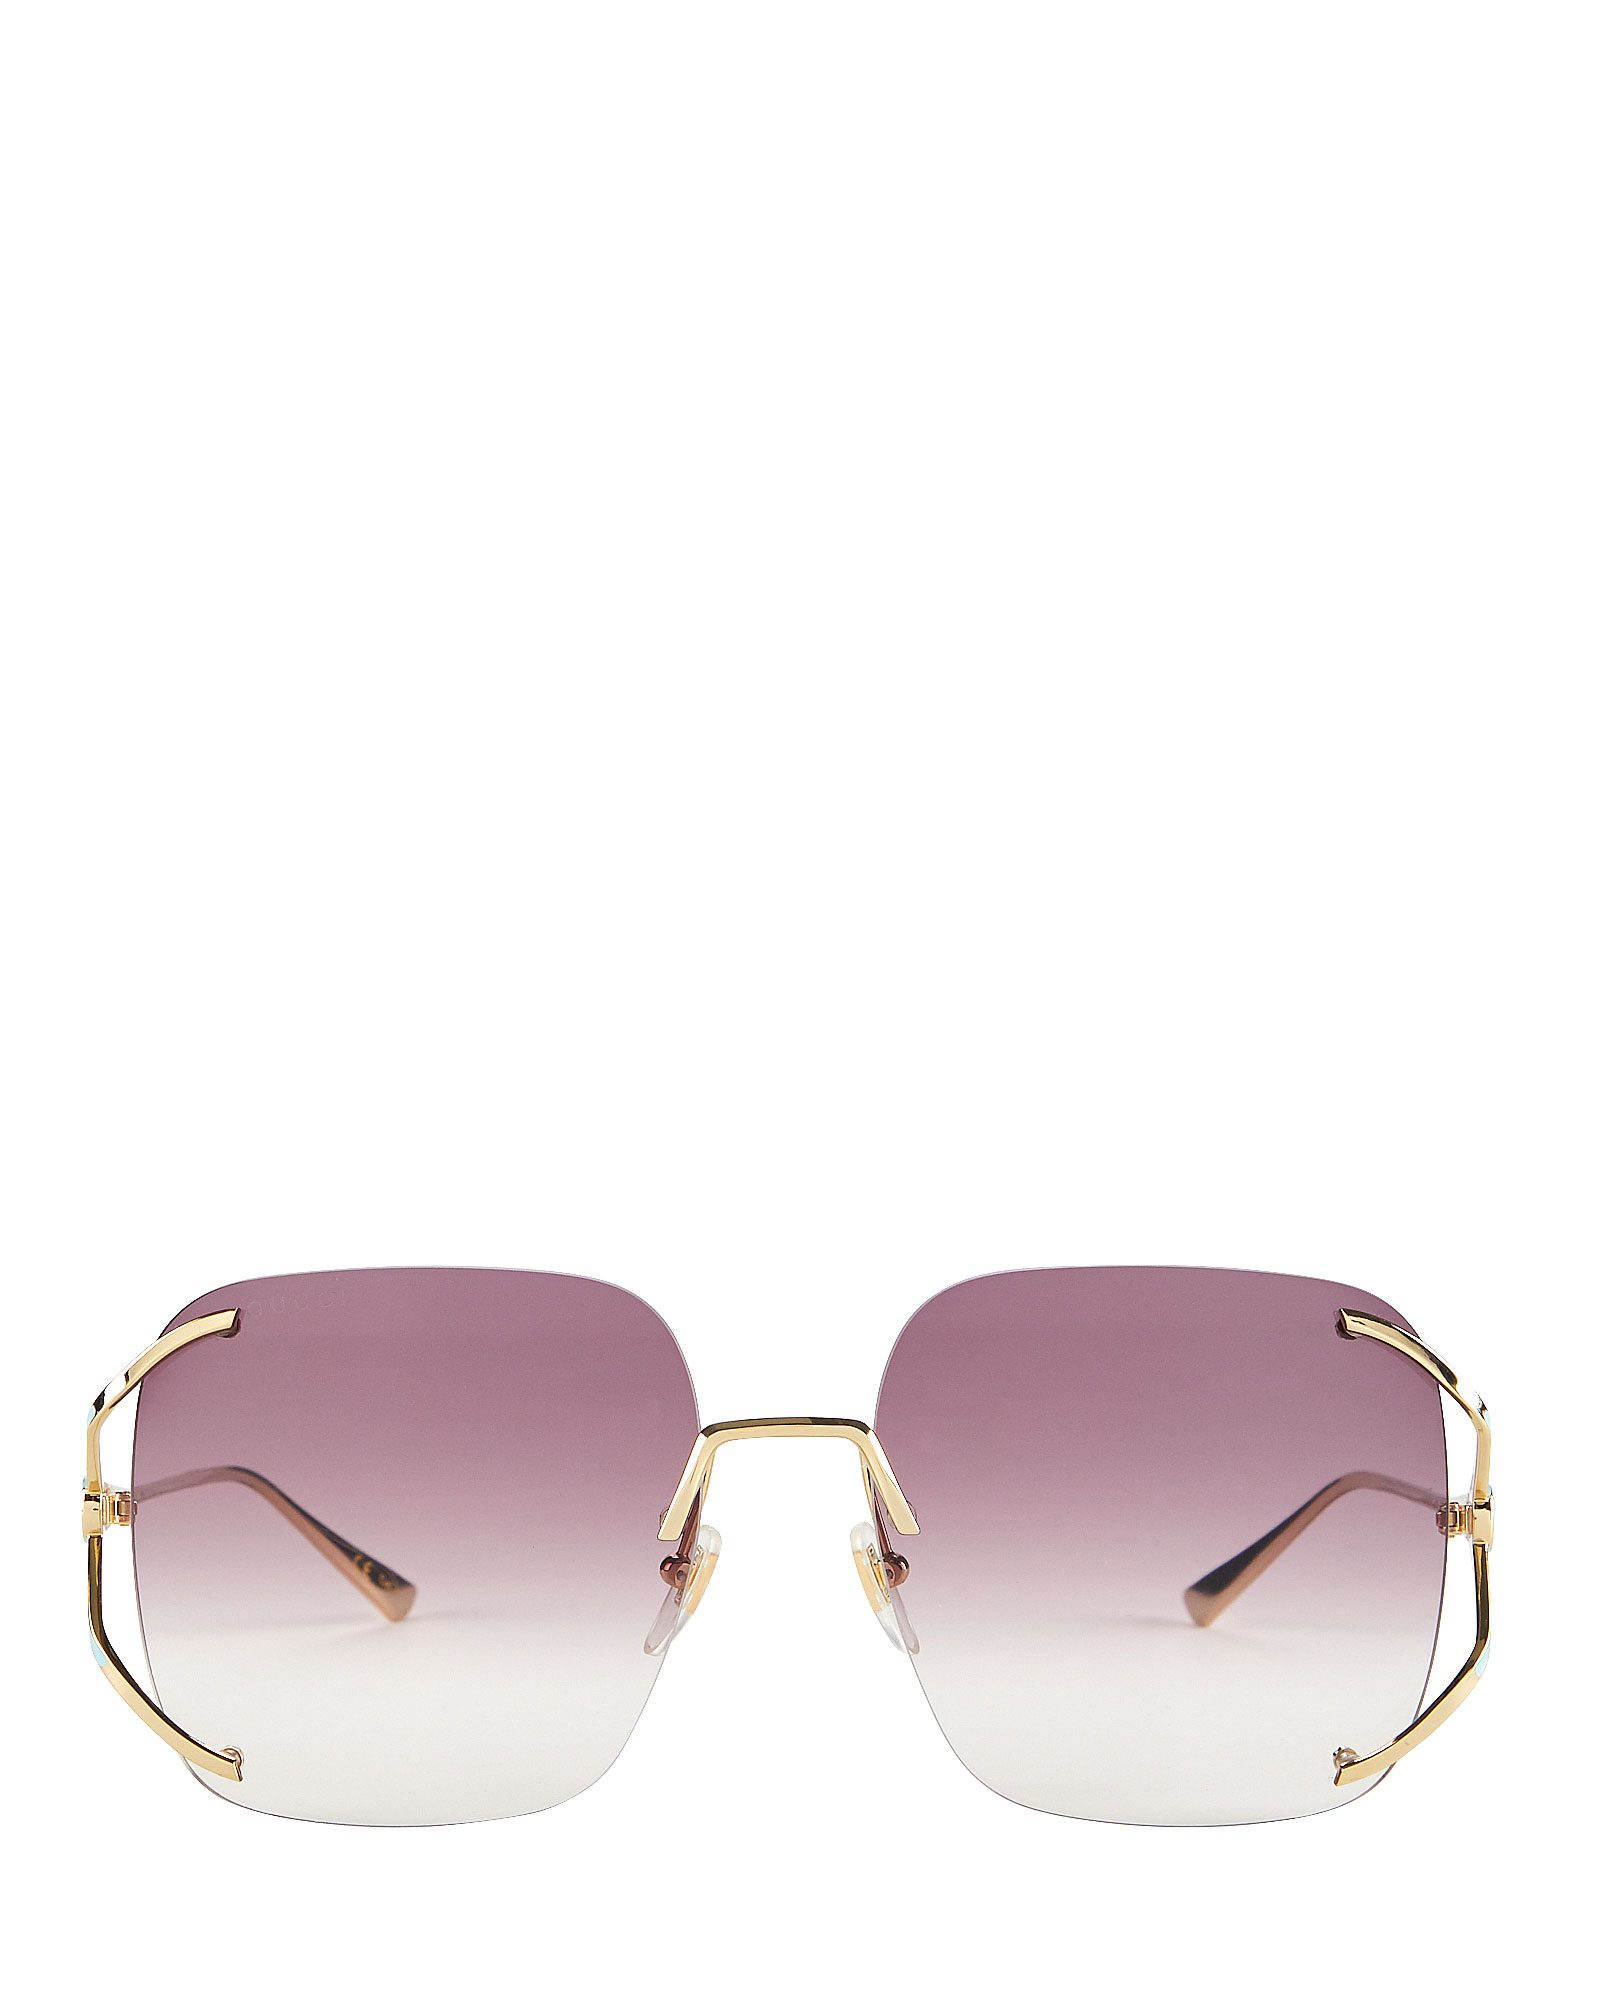 Gucci Oversized Square Sunglasses In Gold/violet